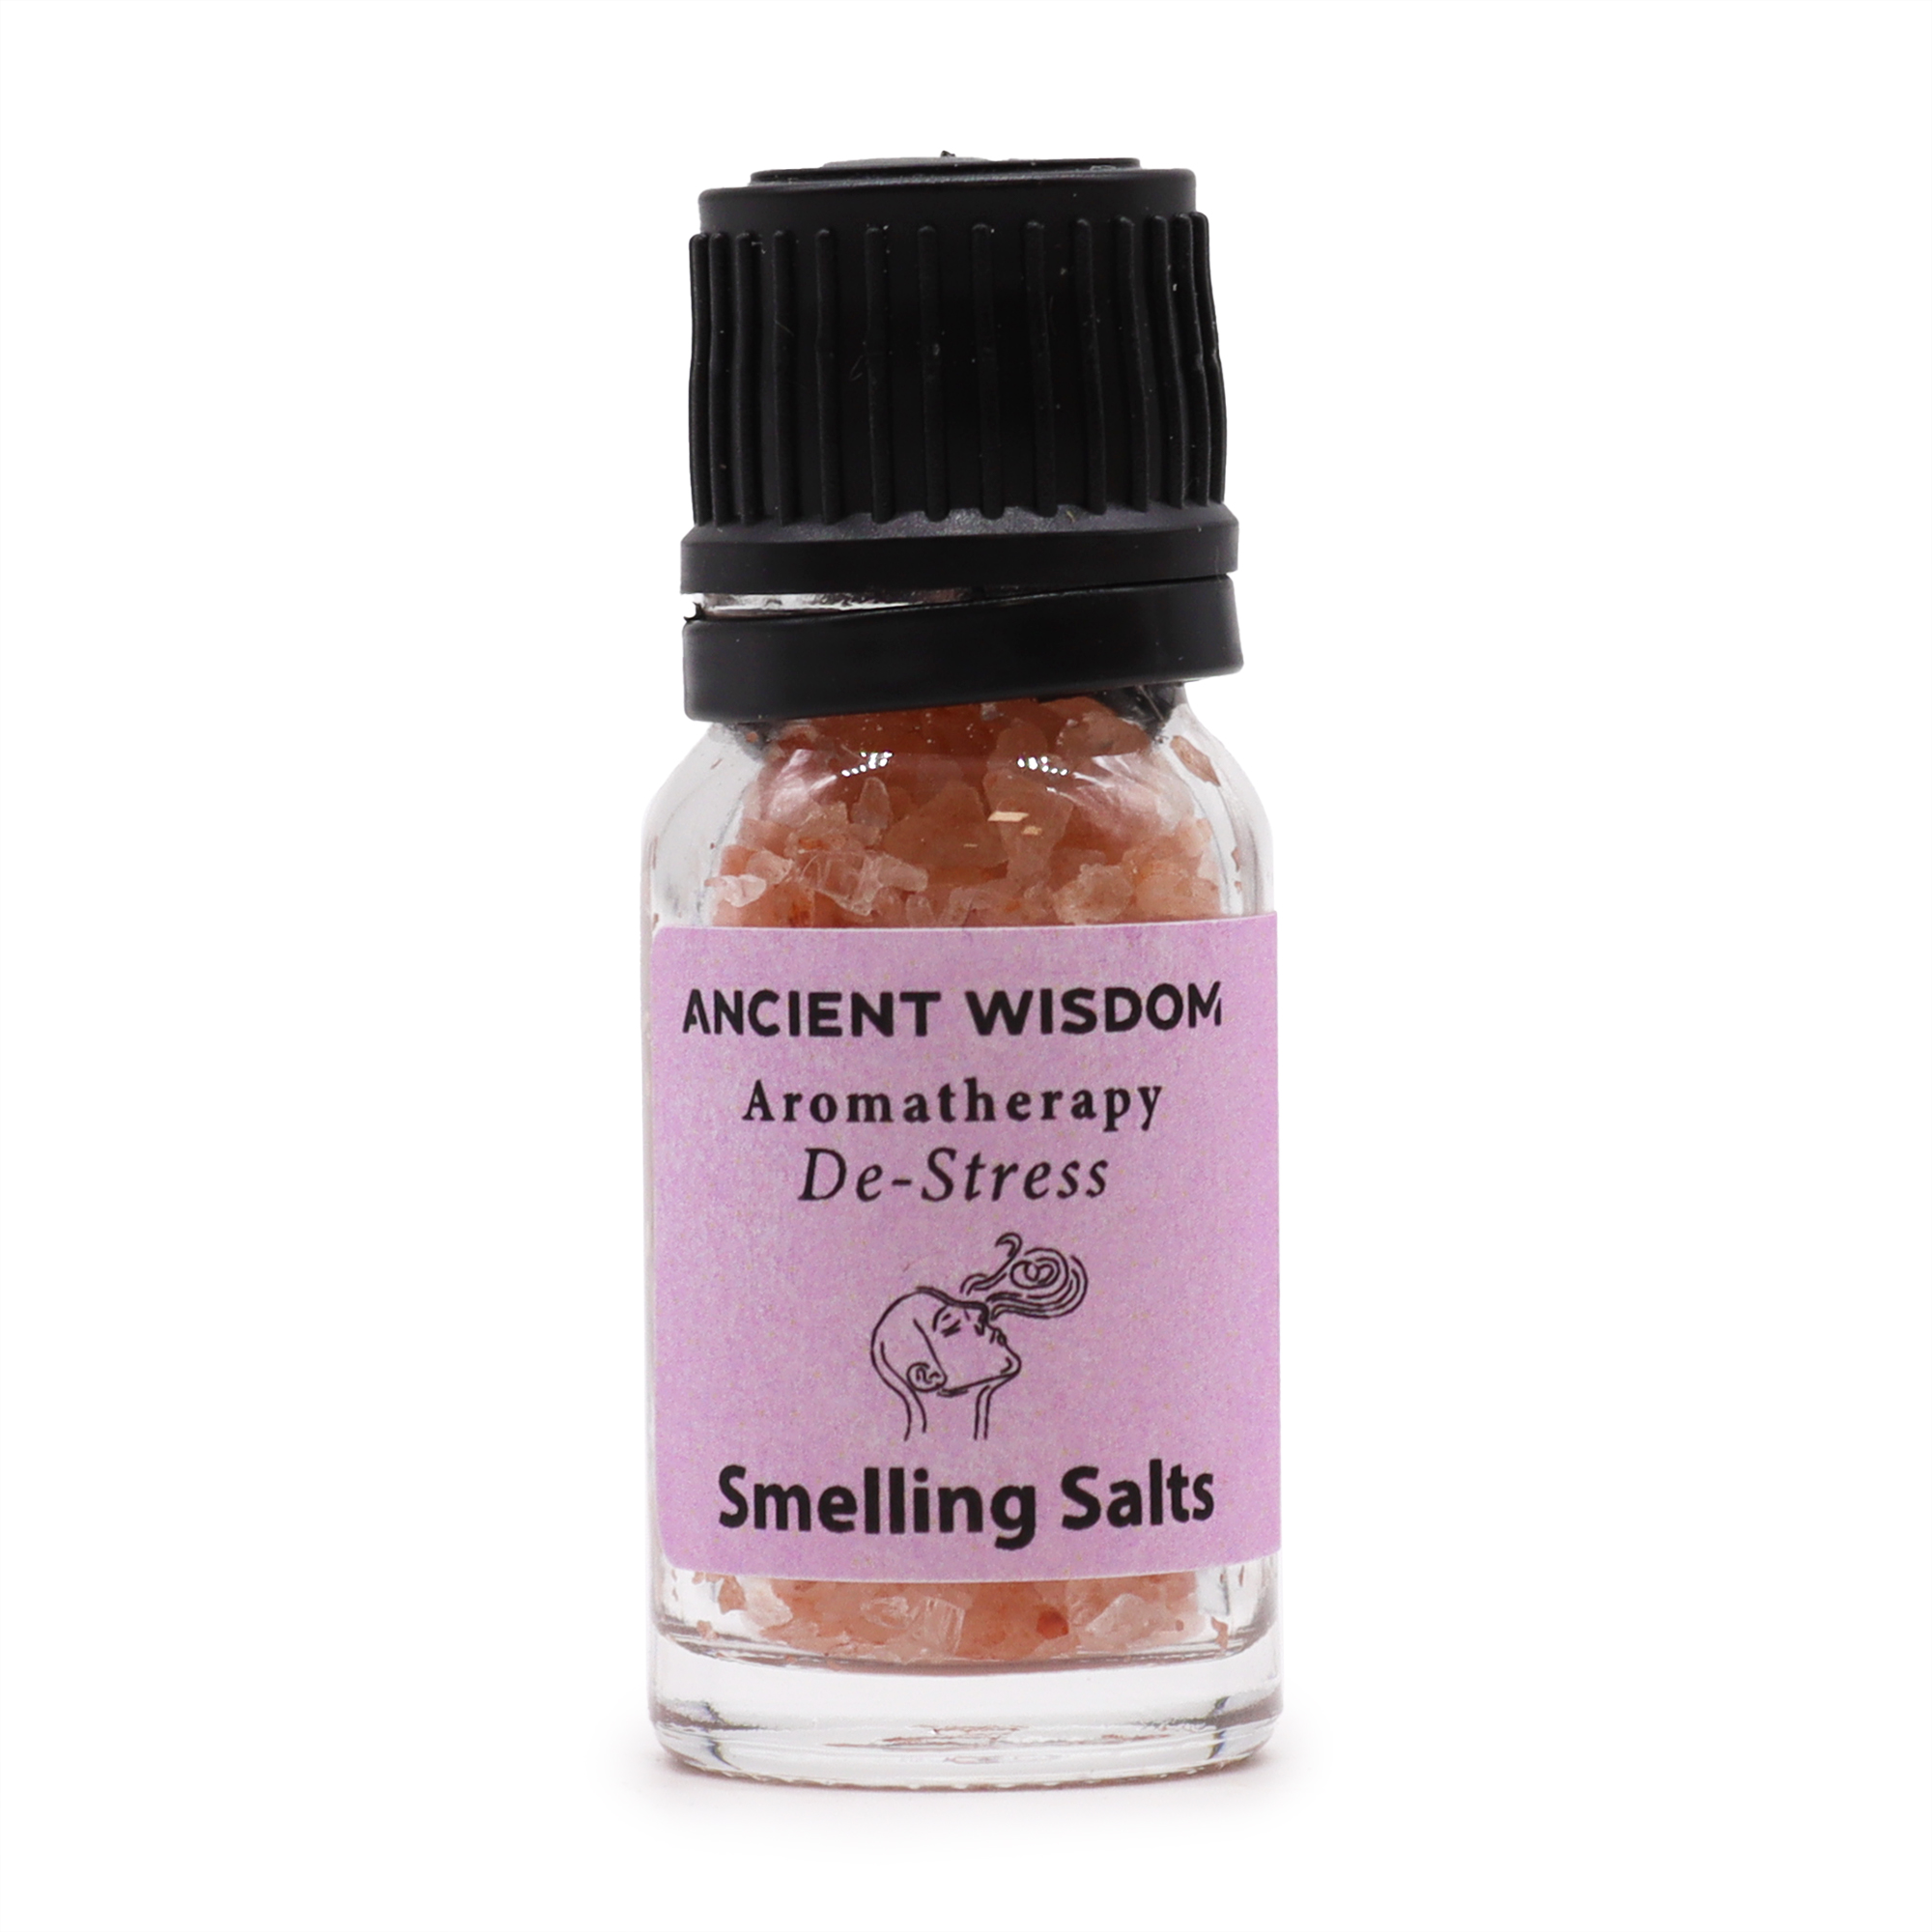 De-Stress Aromatherapy Smelling Salts